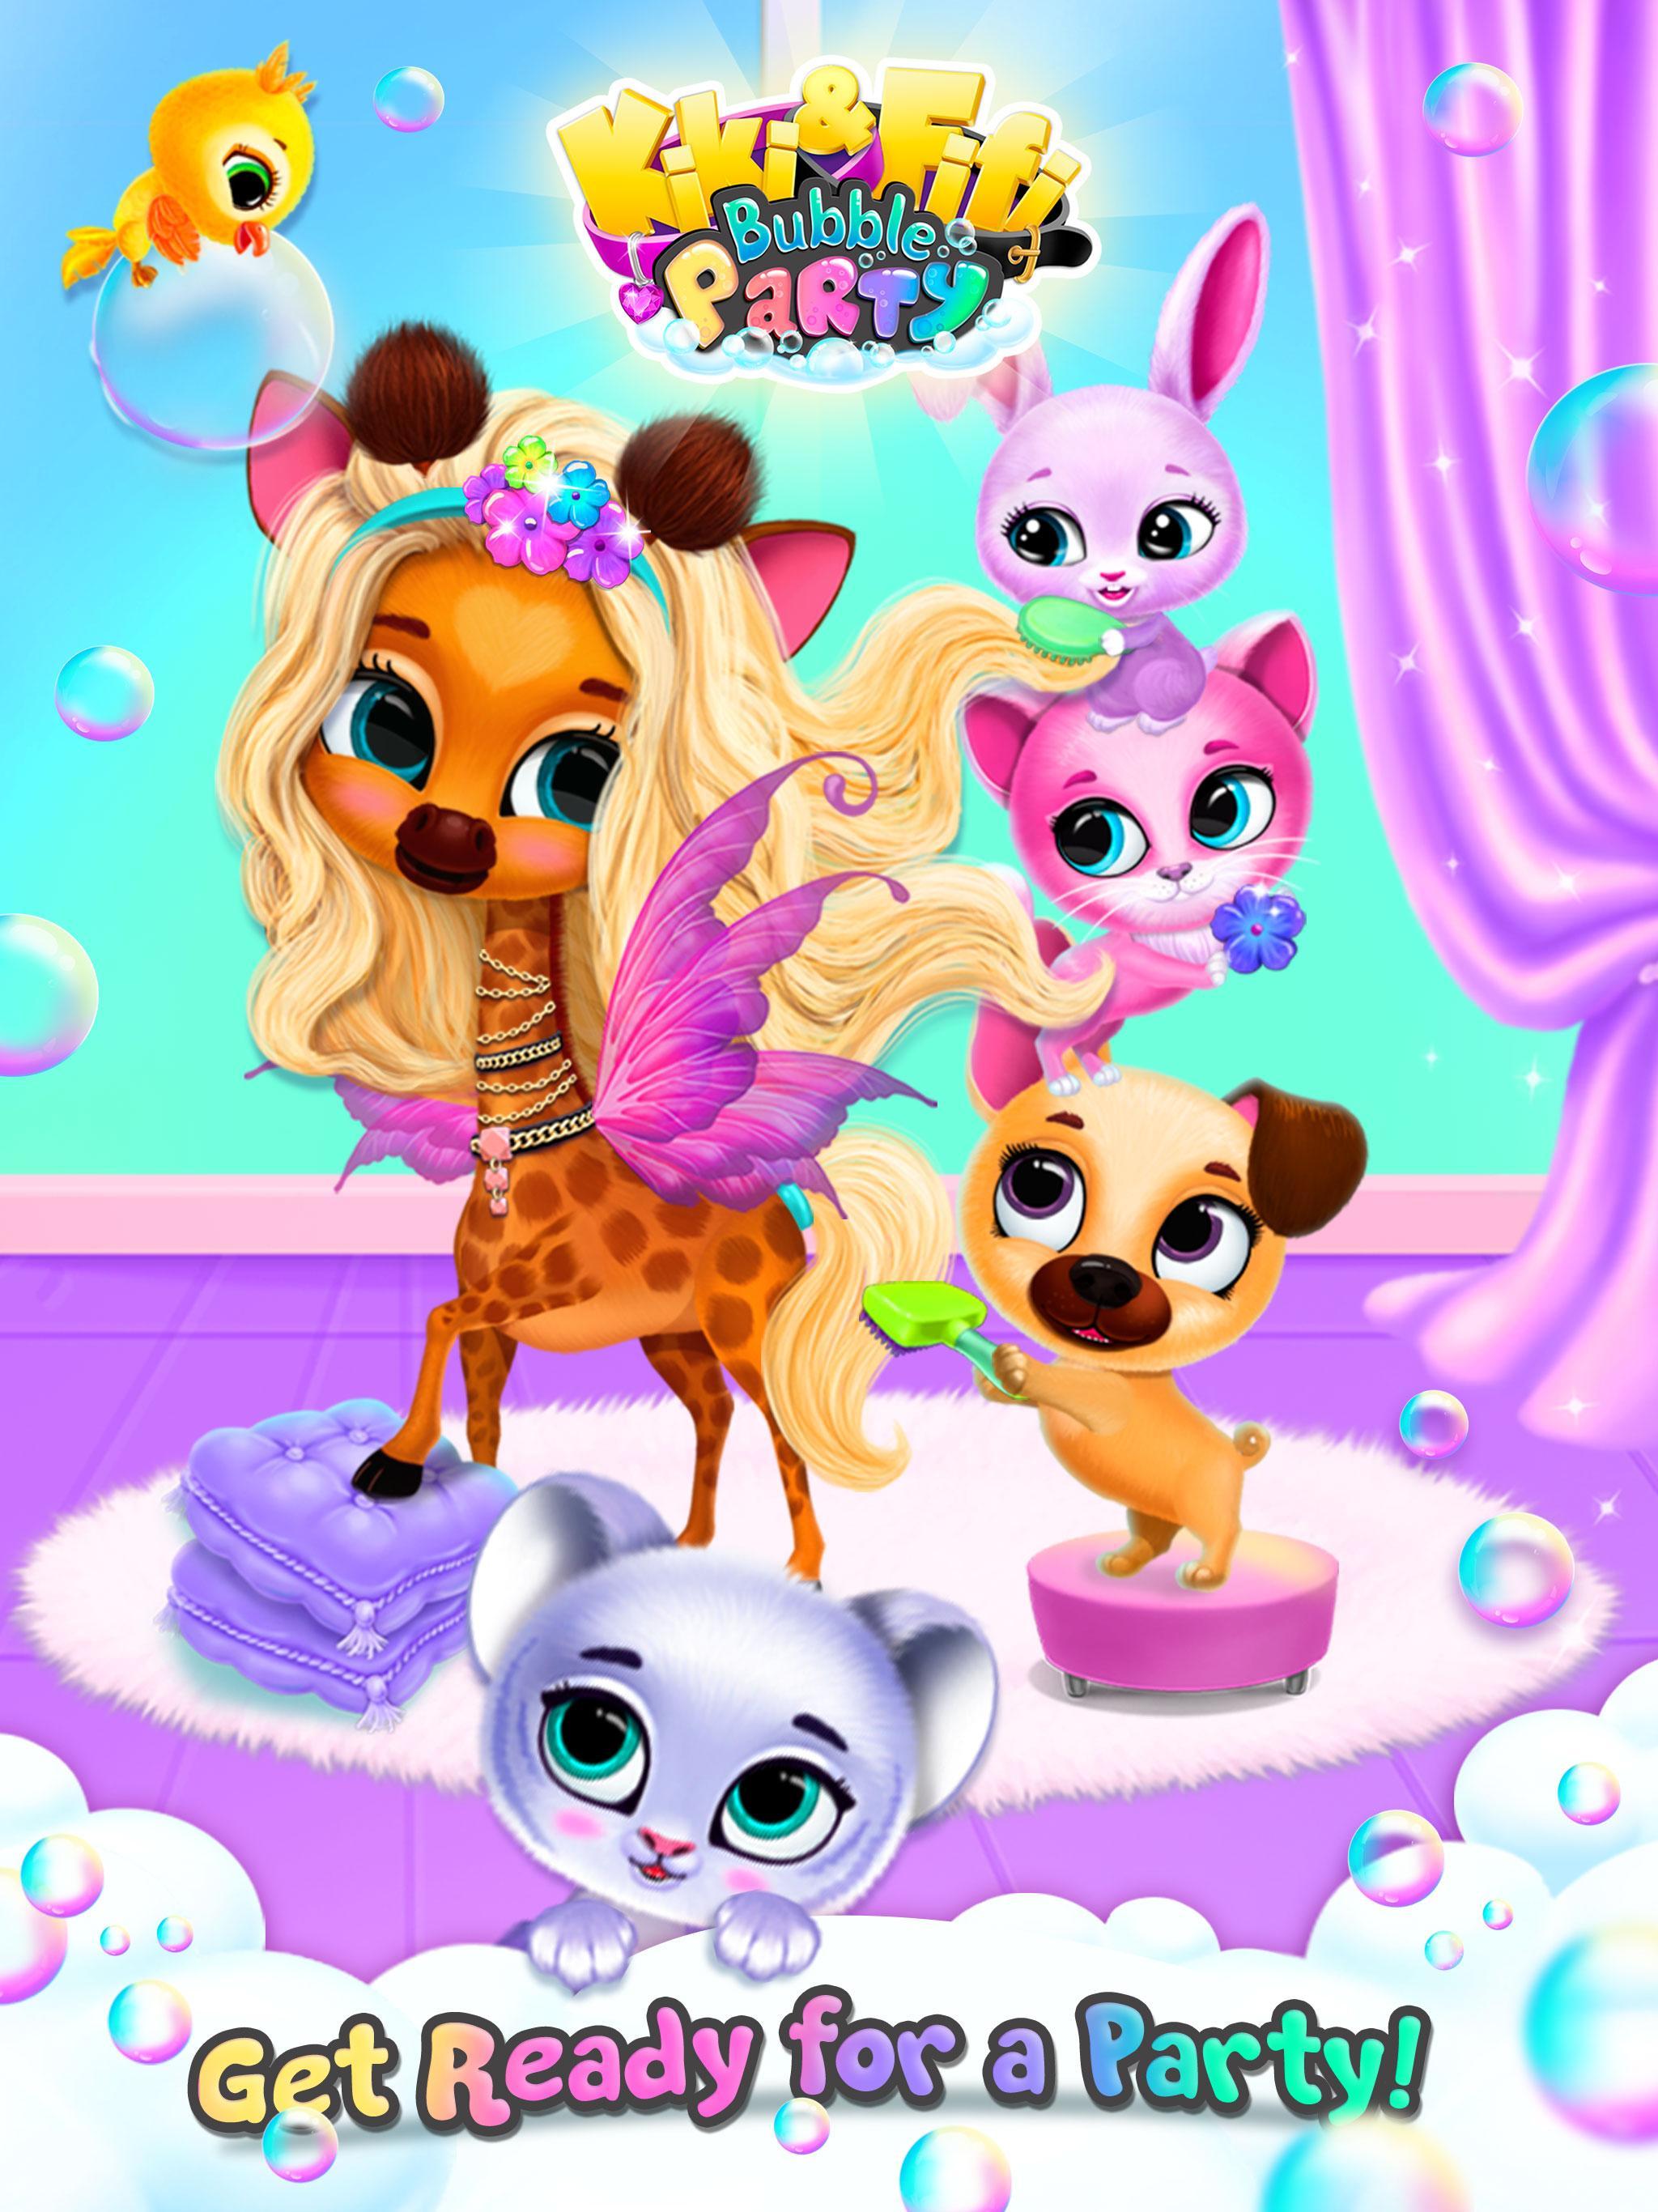 Kiki & Fifi Bubble Party - Fun with Virtual Pets 1.1.21 Screenshot 16